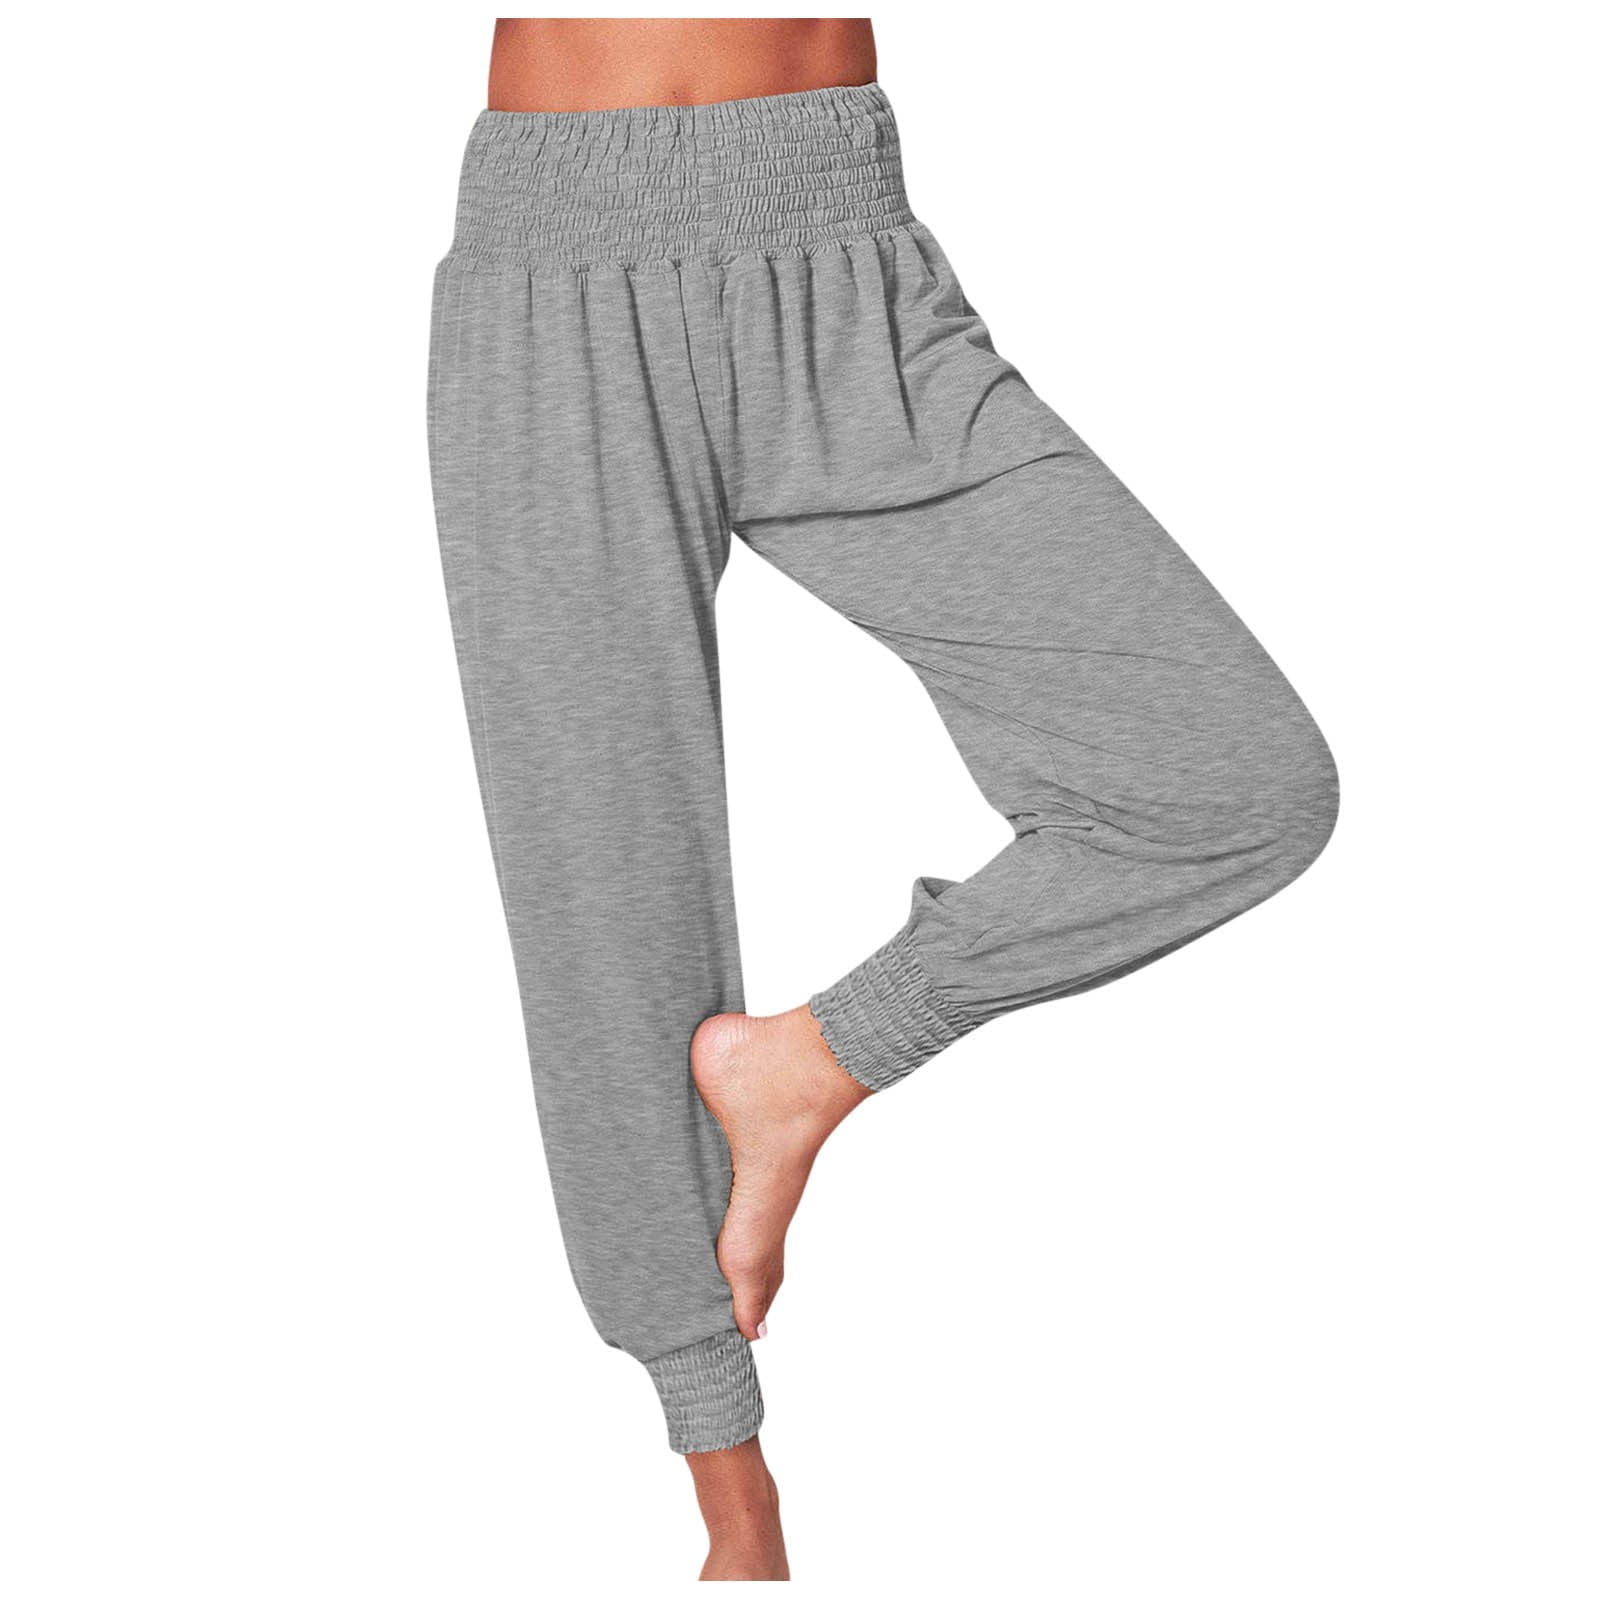 UHUYA Womens Baggy Sweatpants Recreational Home Harron Solid Color Elastic  Mid Waist Sports Yoga Fold Leggings Long Pants Coffee XL US:10